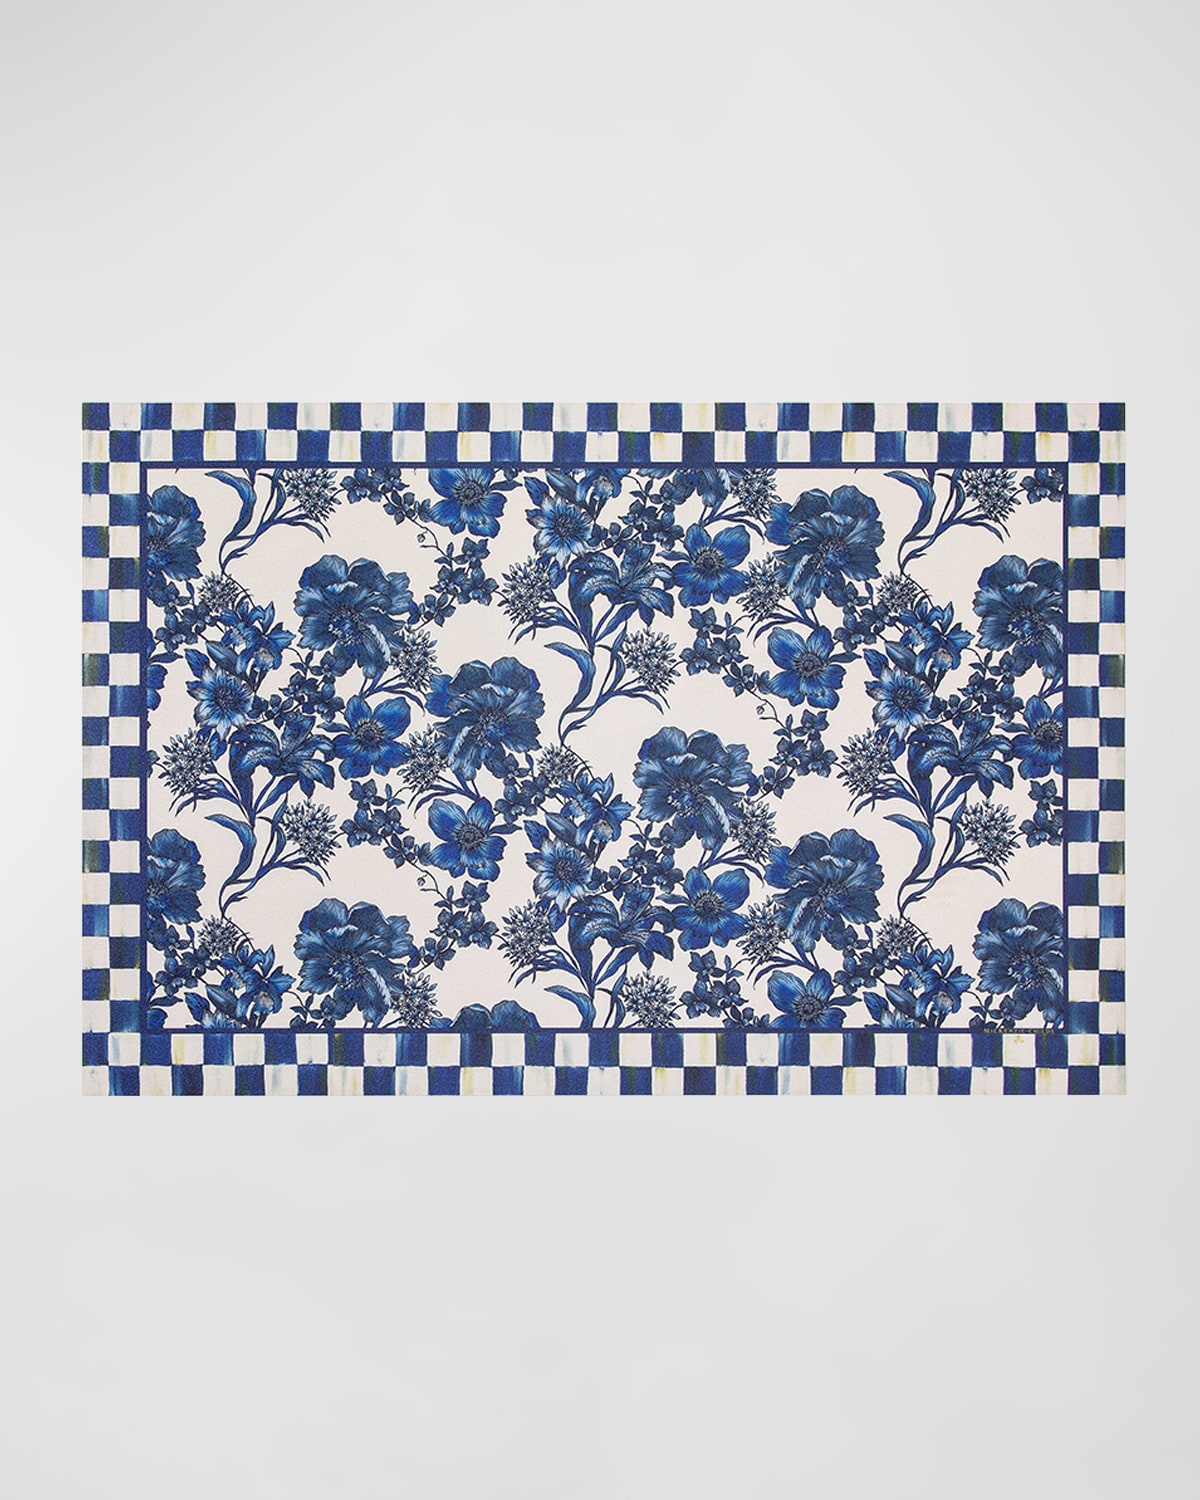 Mackenzie-childs Royal English Garden Floor Mat, 2' X 3' In Blue